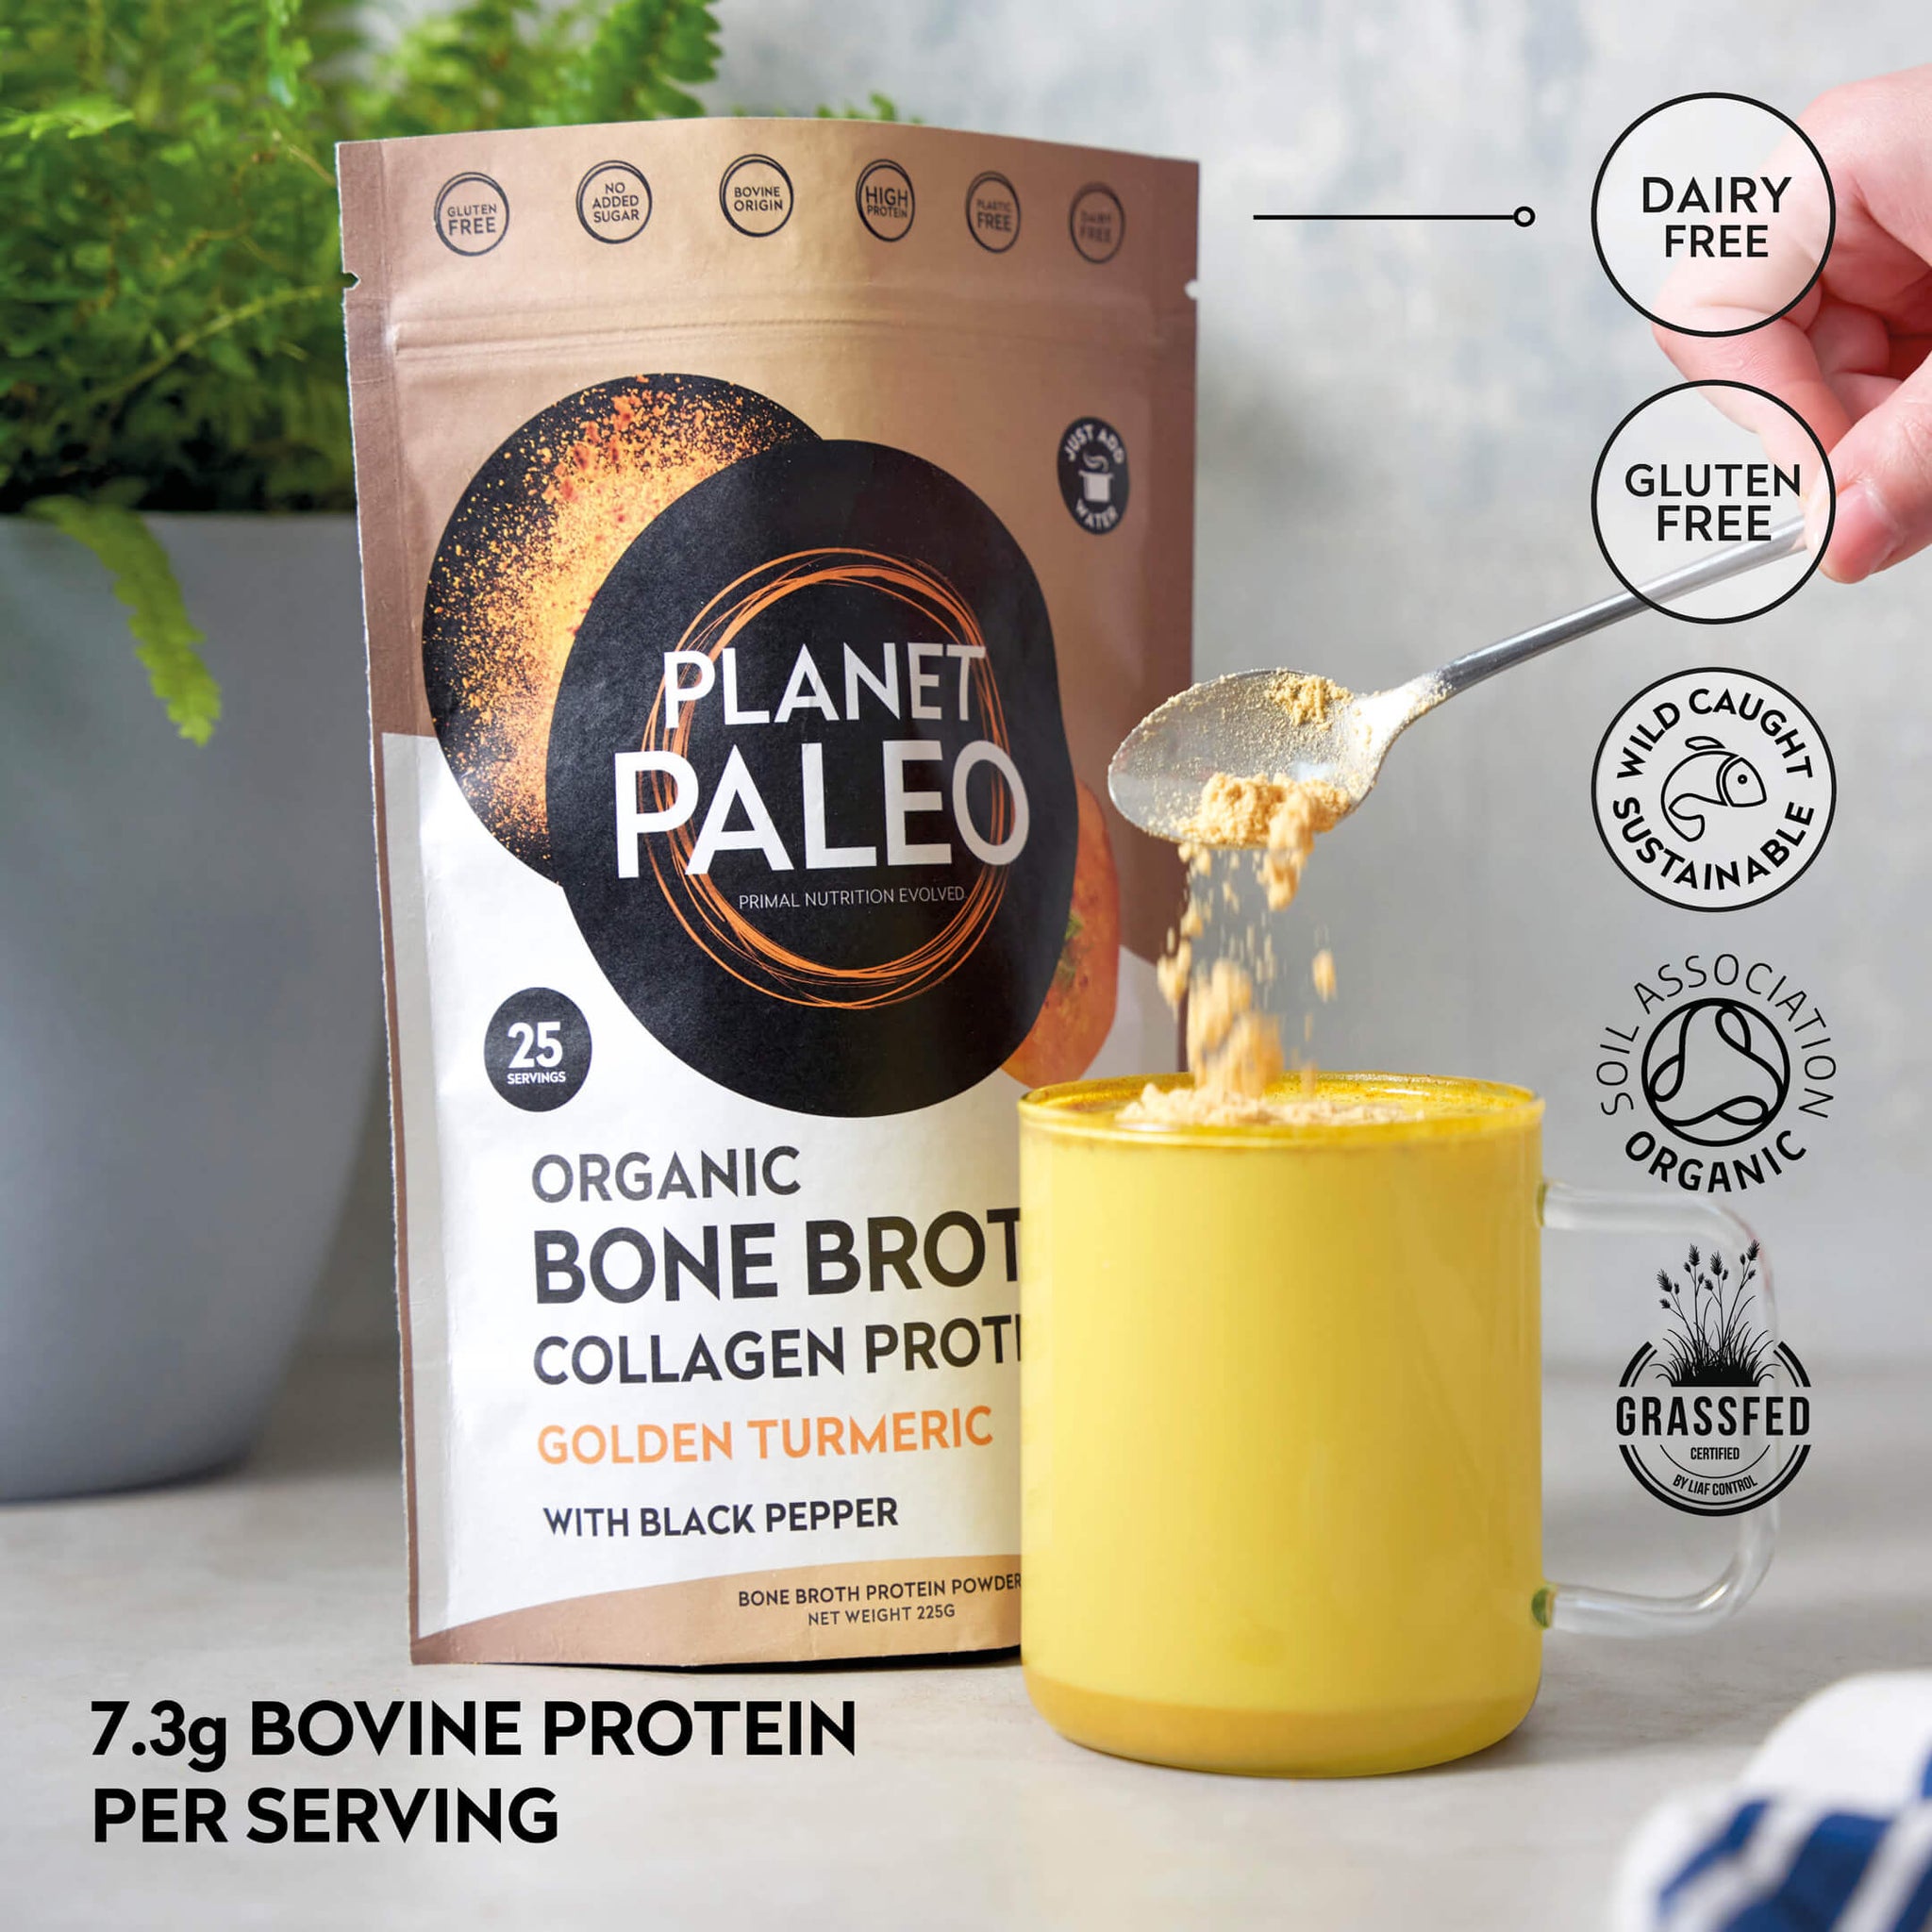 Organic Bone Broth - Golden Turmeric